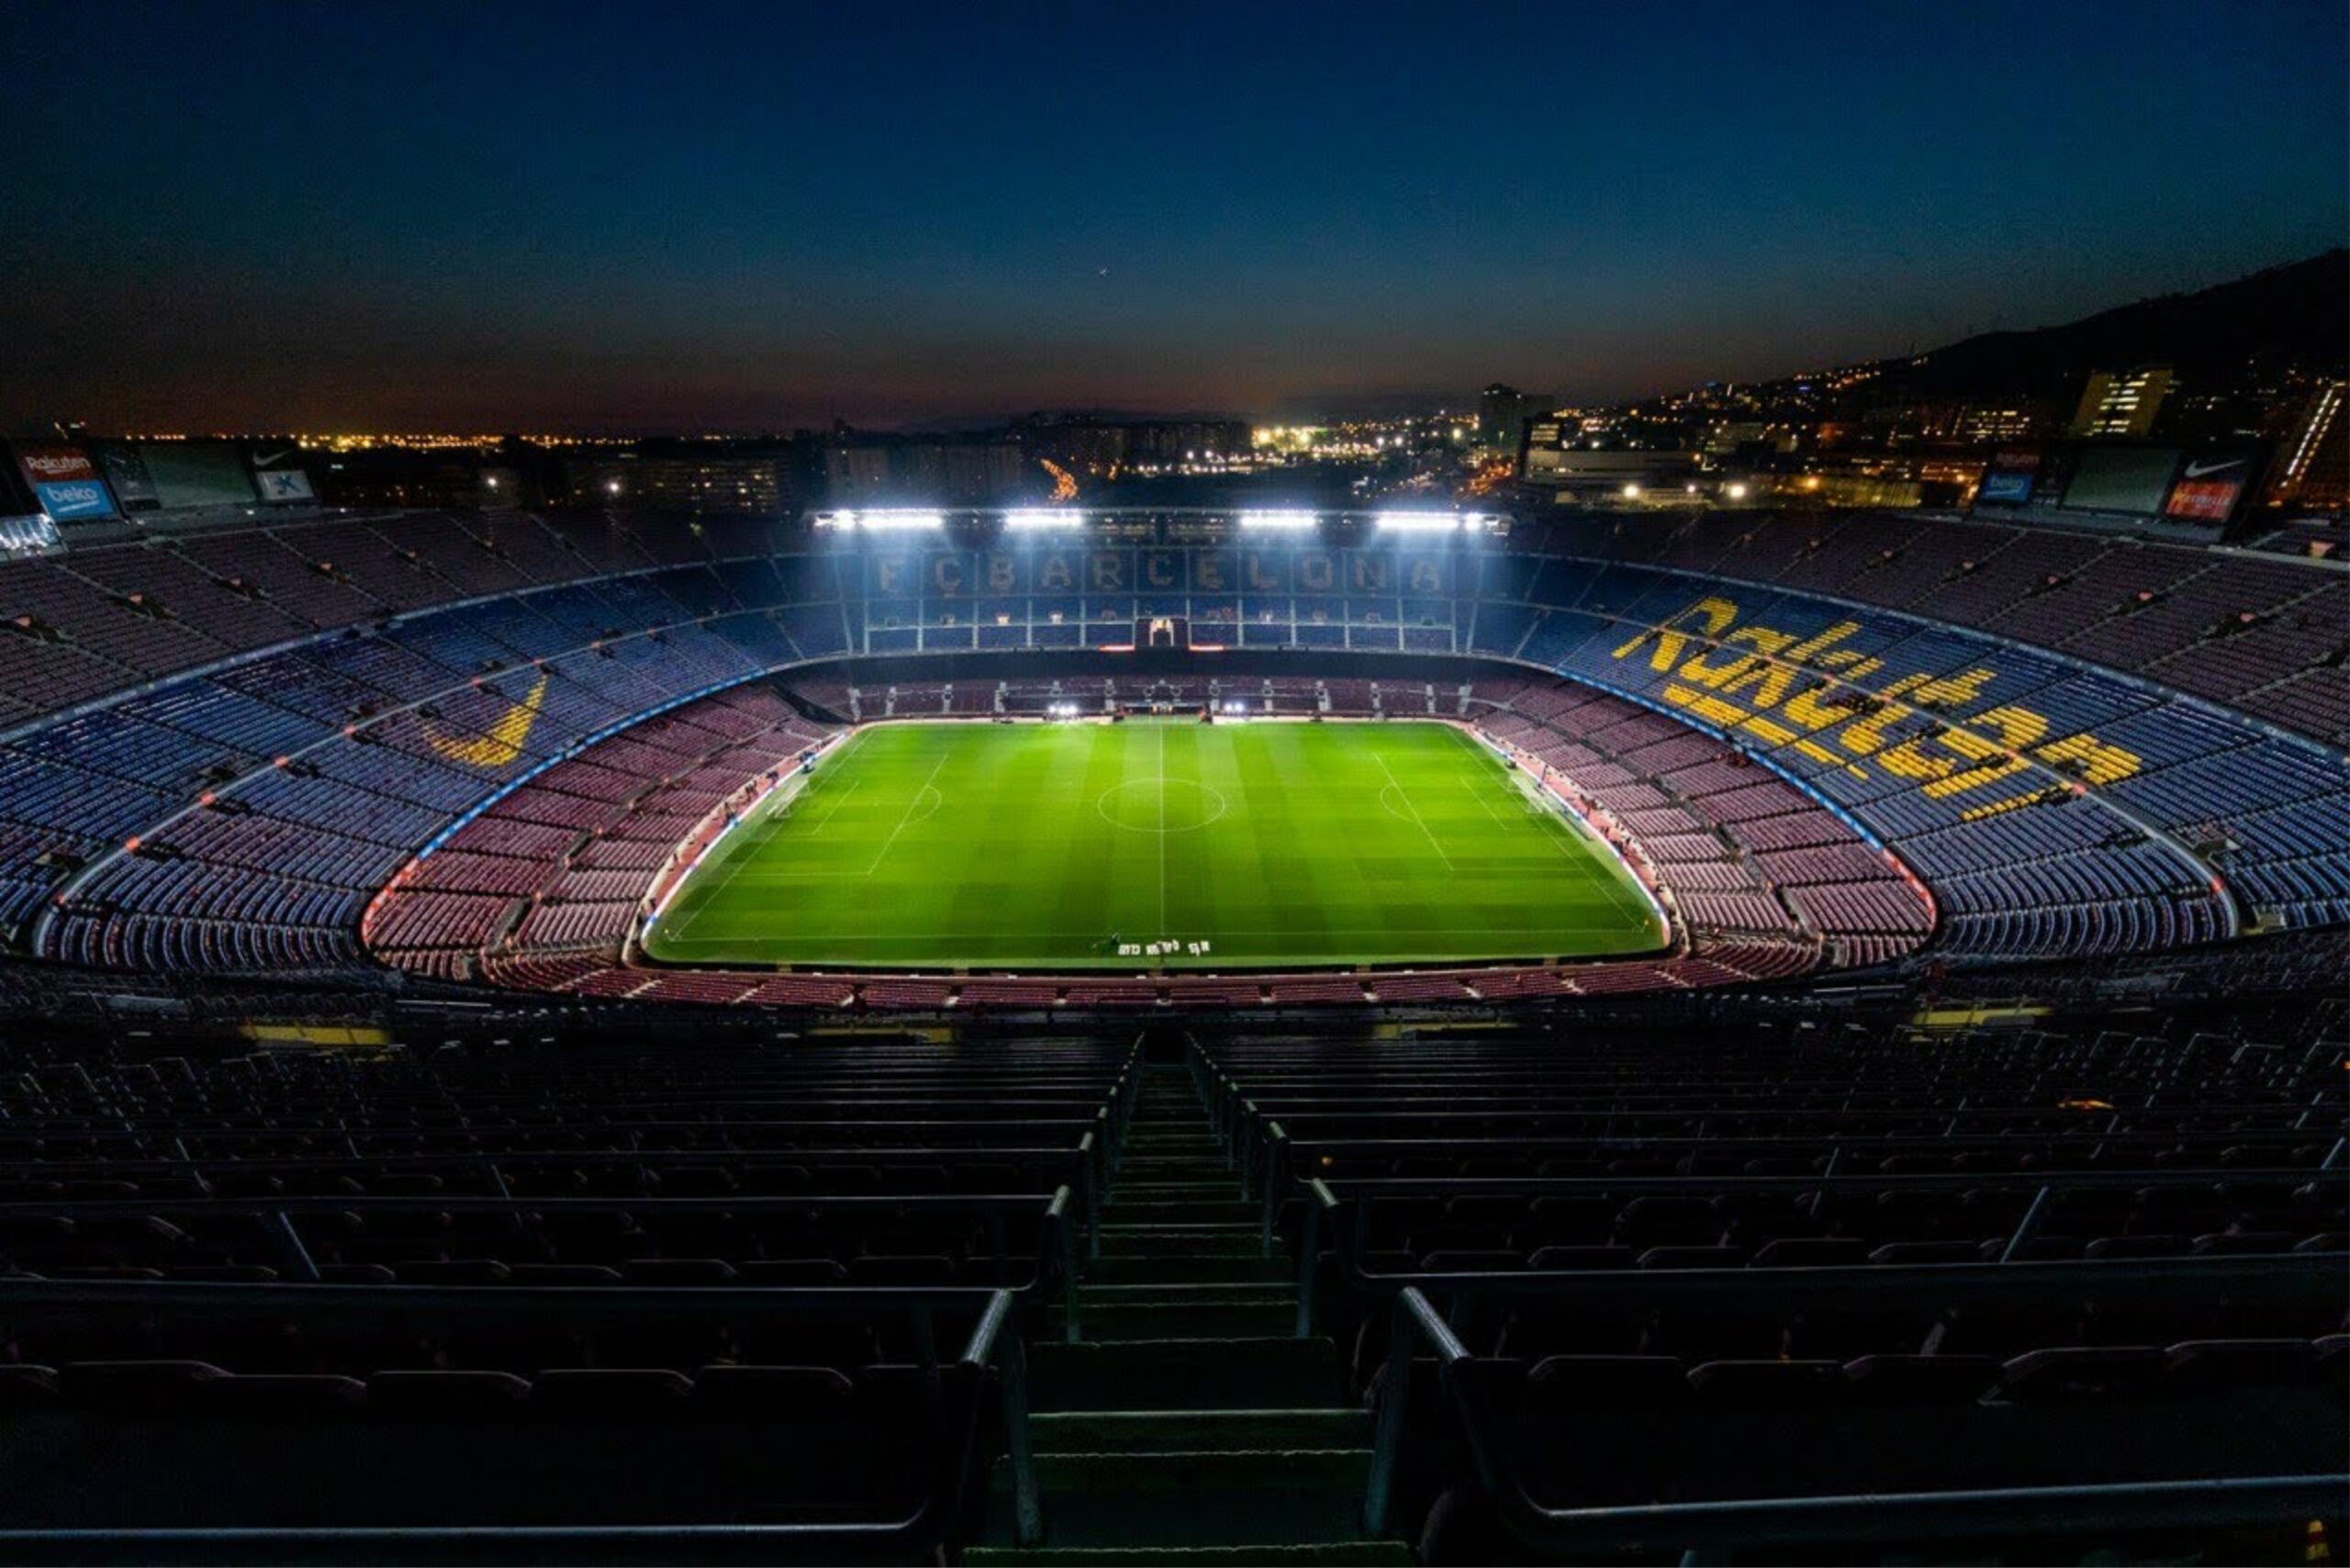 Camp Nou stadium, home of FC Barcelona